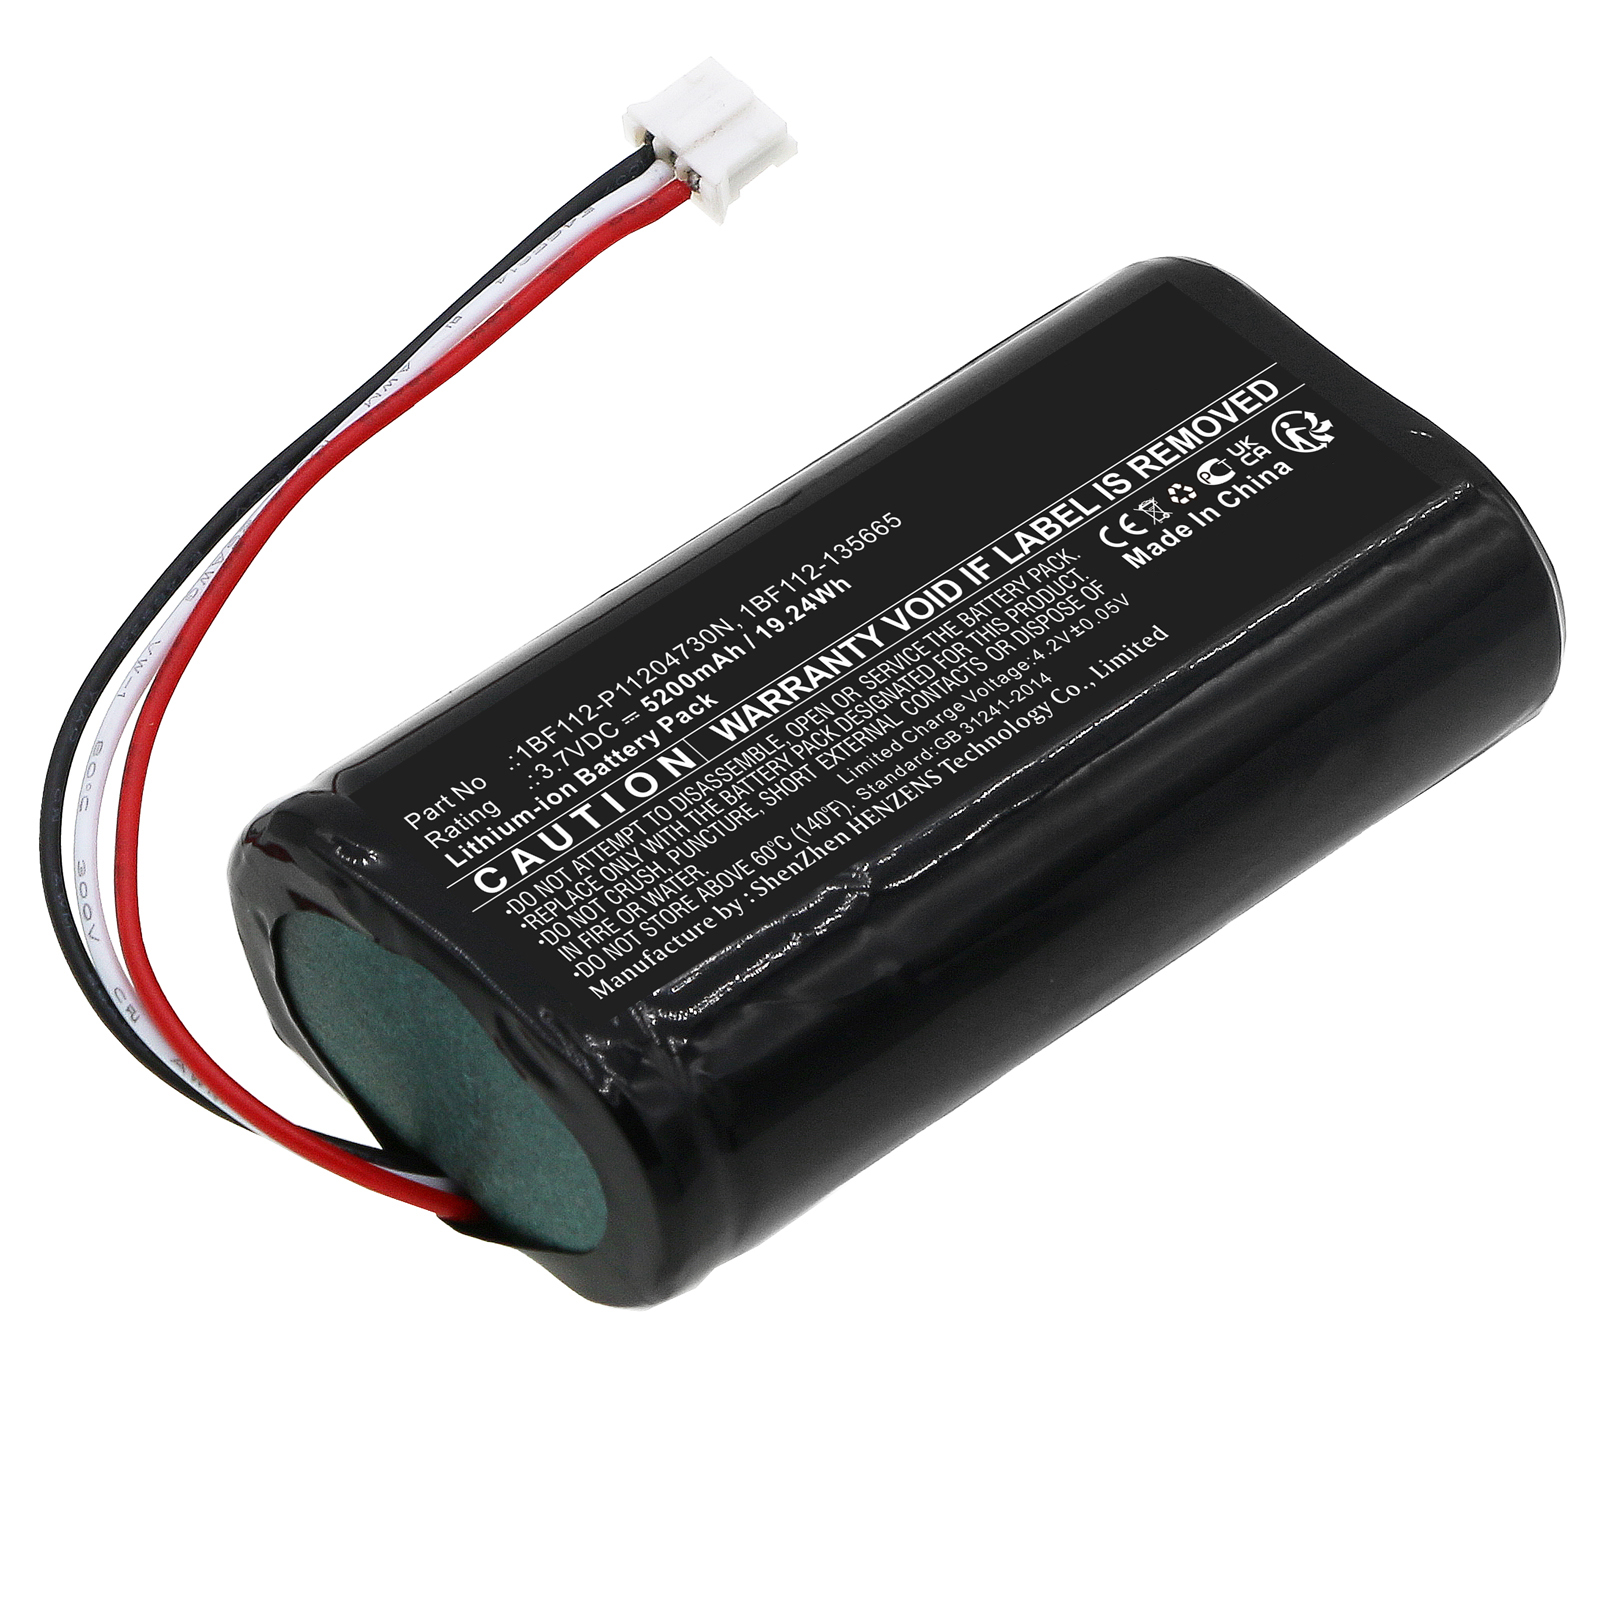 Batteries for CalAmpGPS